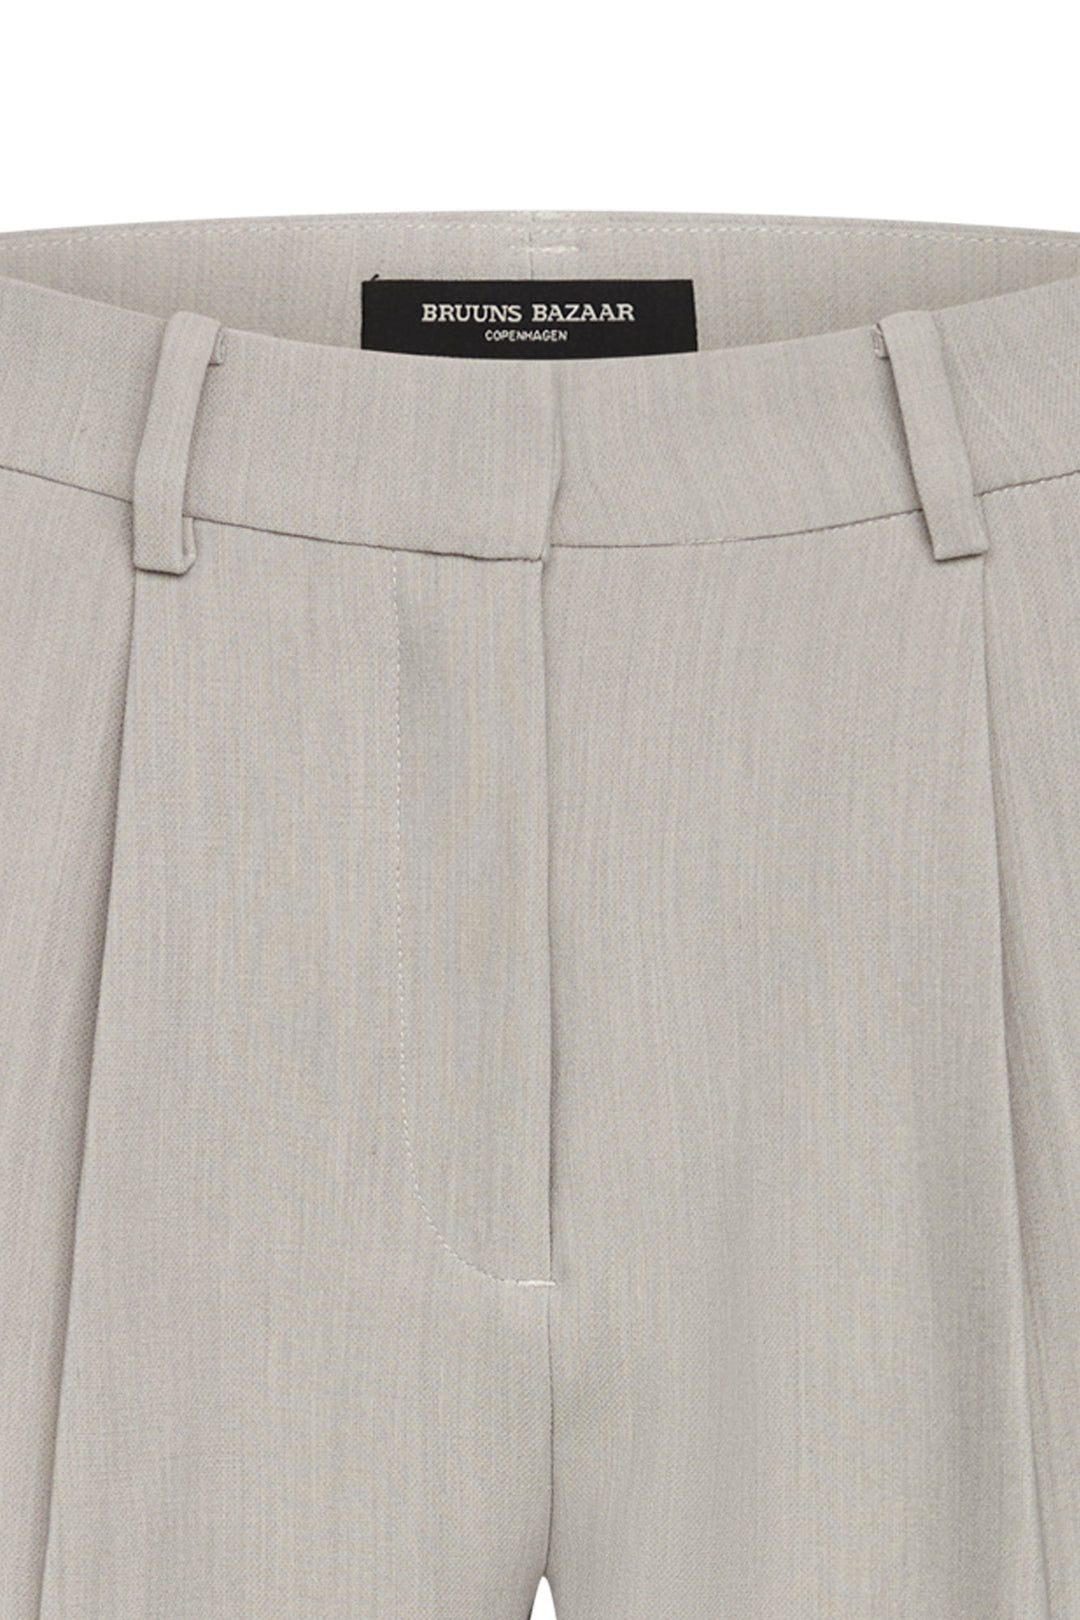 Bruuns Bazaar Women CindySusBBDagny pants Pants Light grey melange